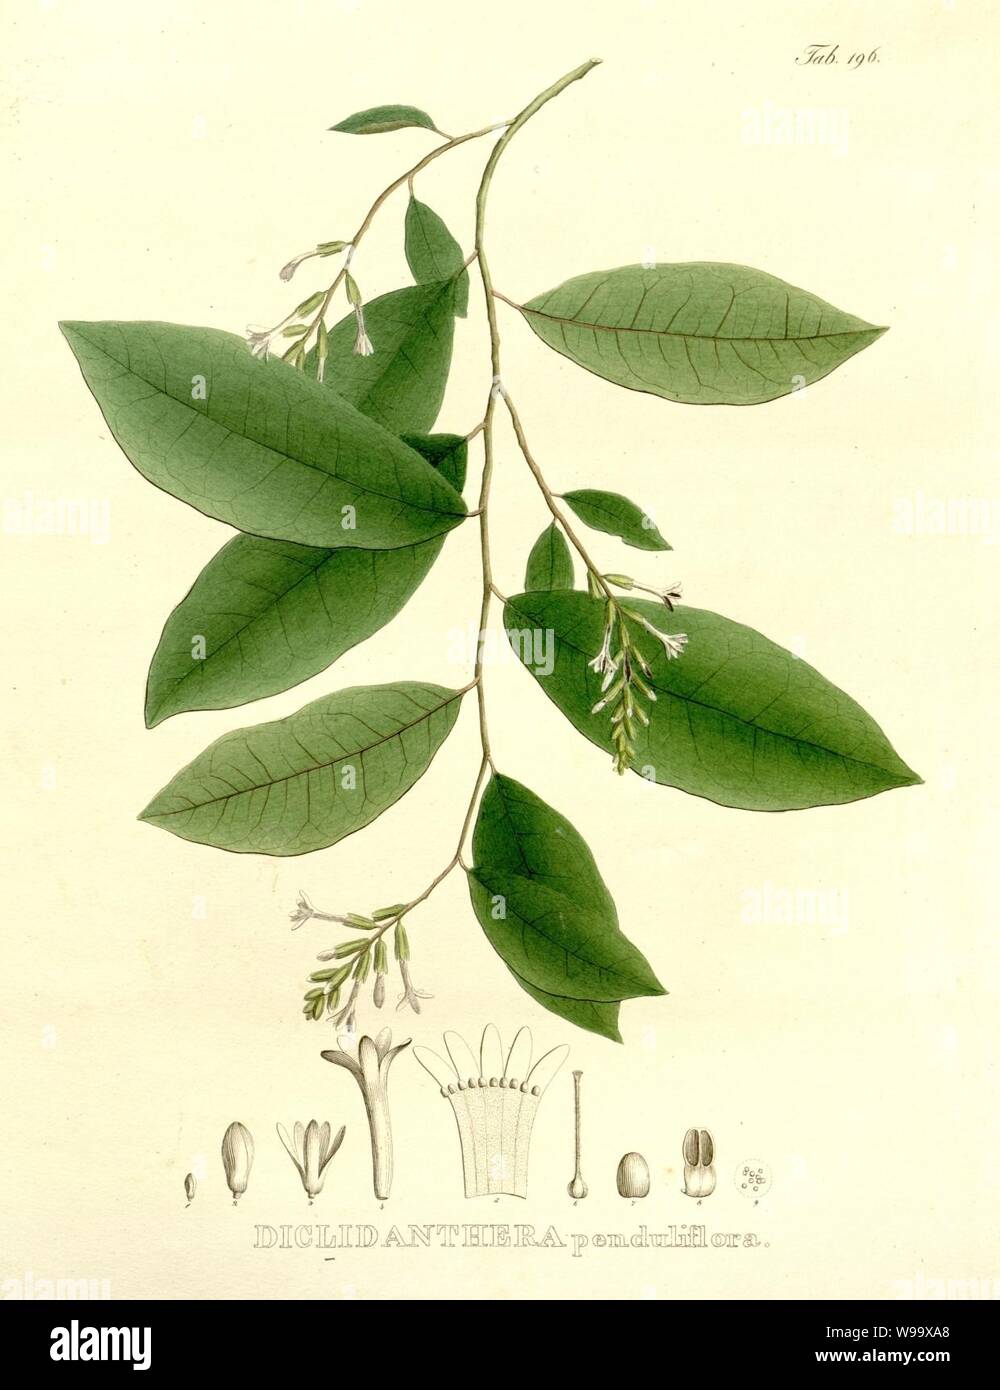 Diclidanthera penduliflora Martius Nov. Gen. Sp. Pl. 2, t. 196. Stock Photo